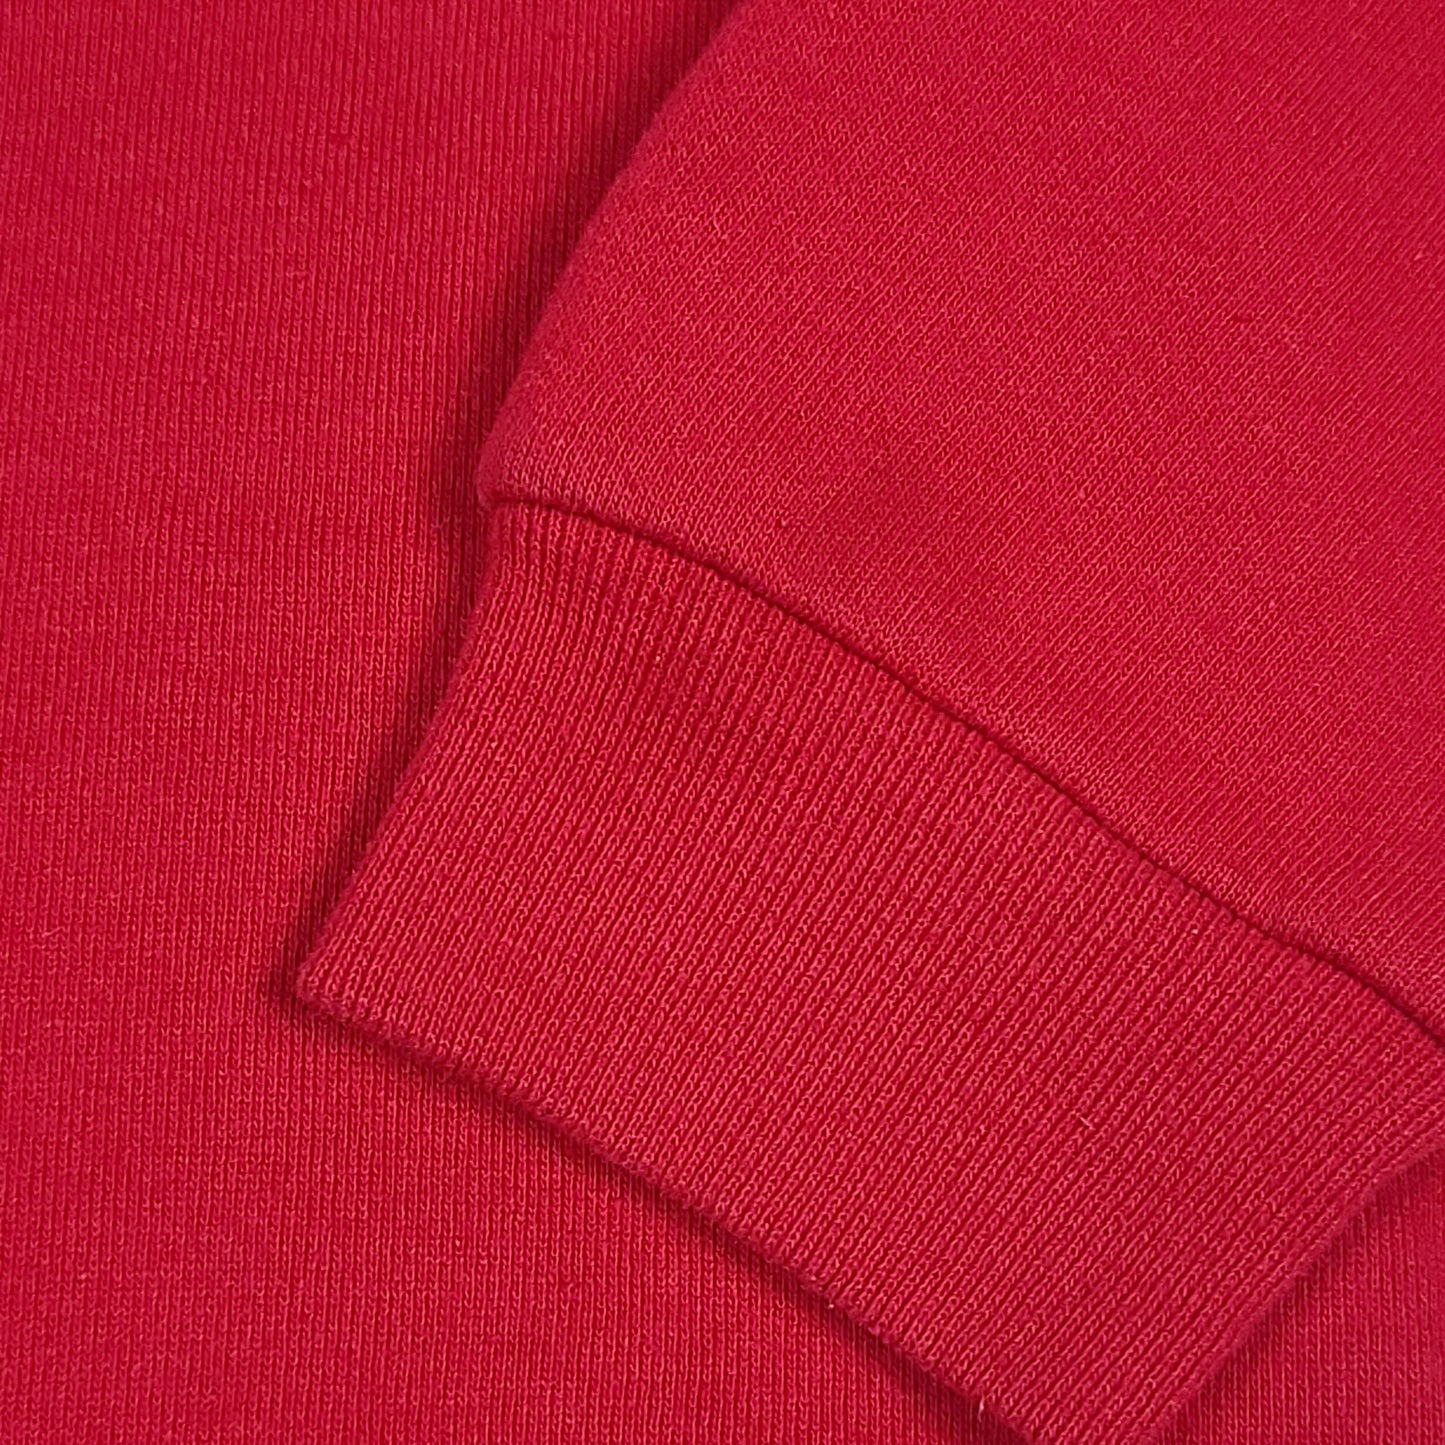 University of Nebraska Red Russell Athletic Sweatshirt